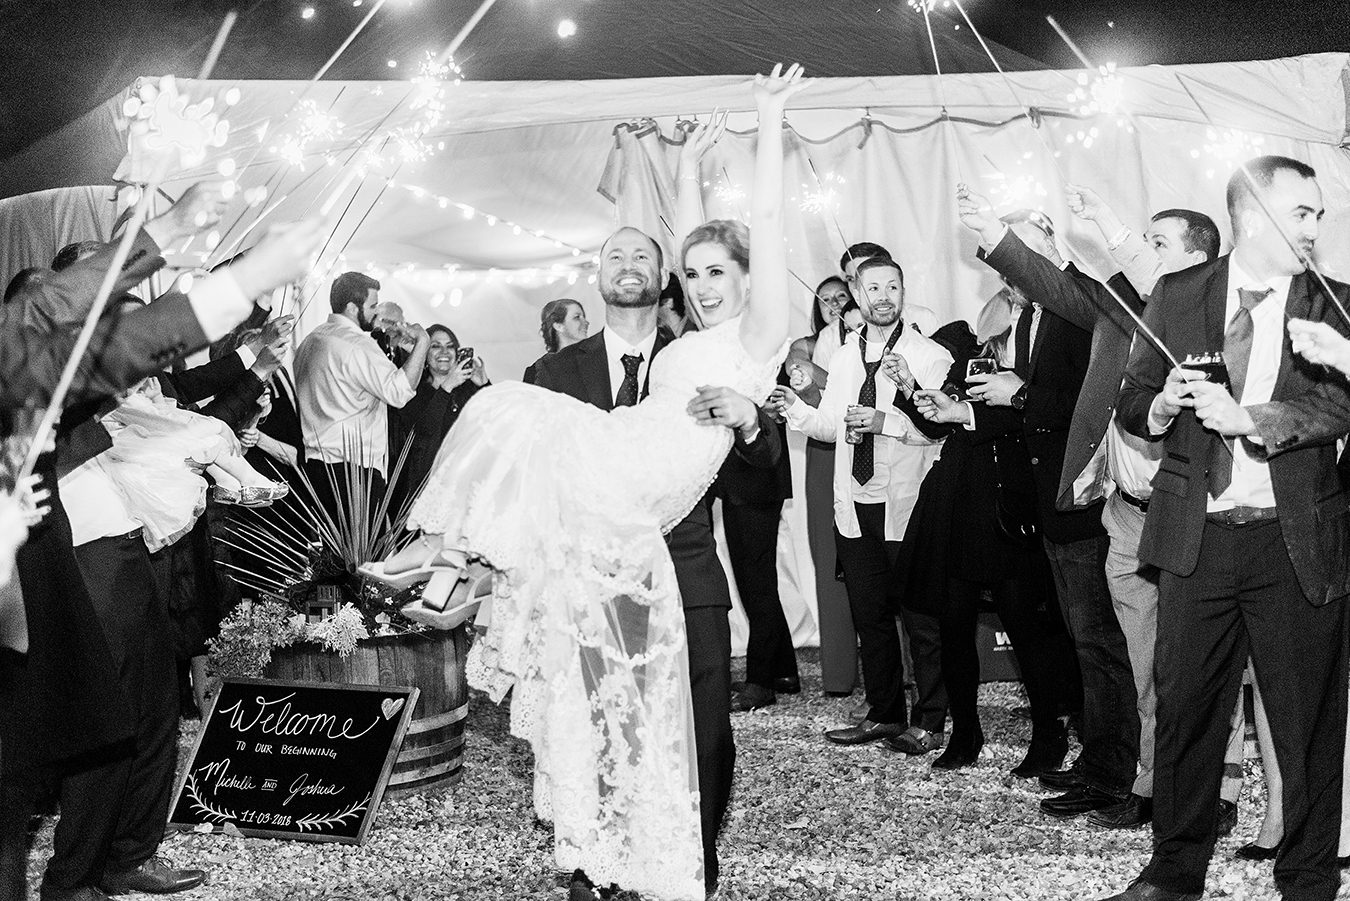 Josh & Michelle's Mesa Park Vineyards Wedding | amanda.matilda.photography 